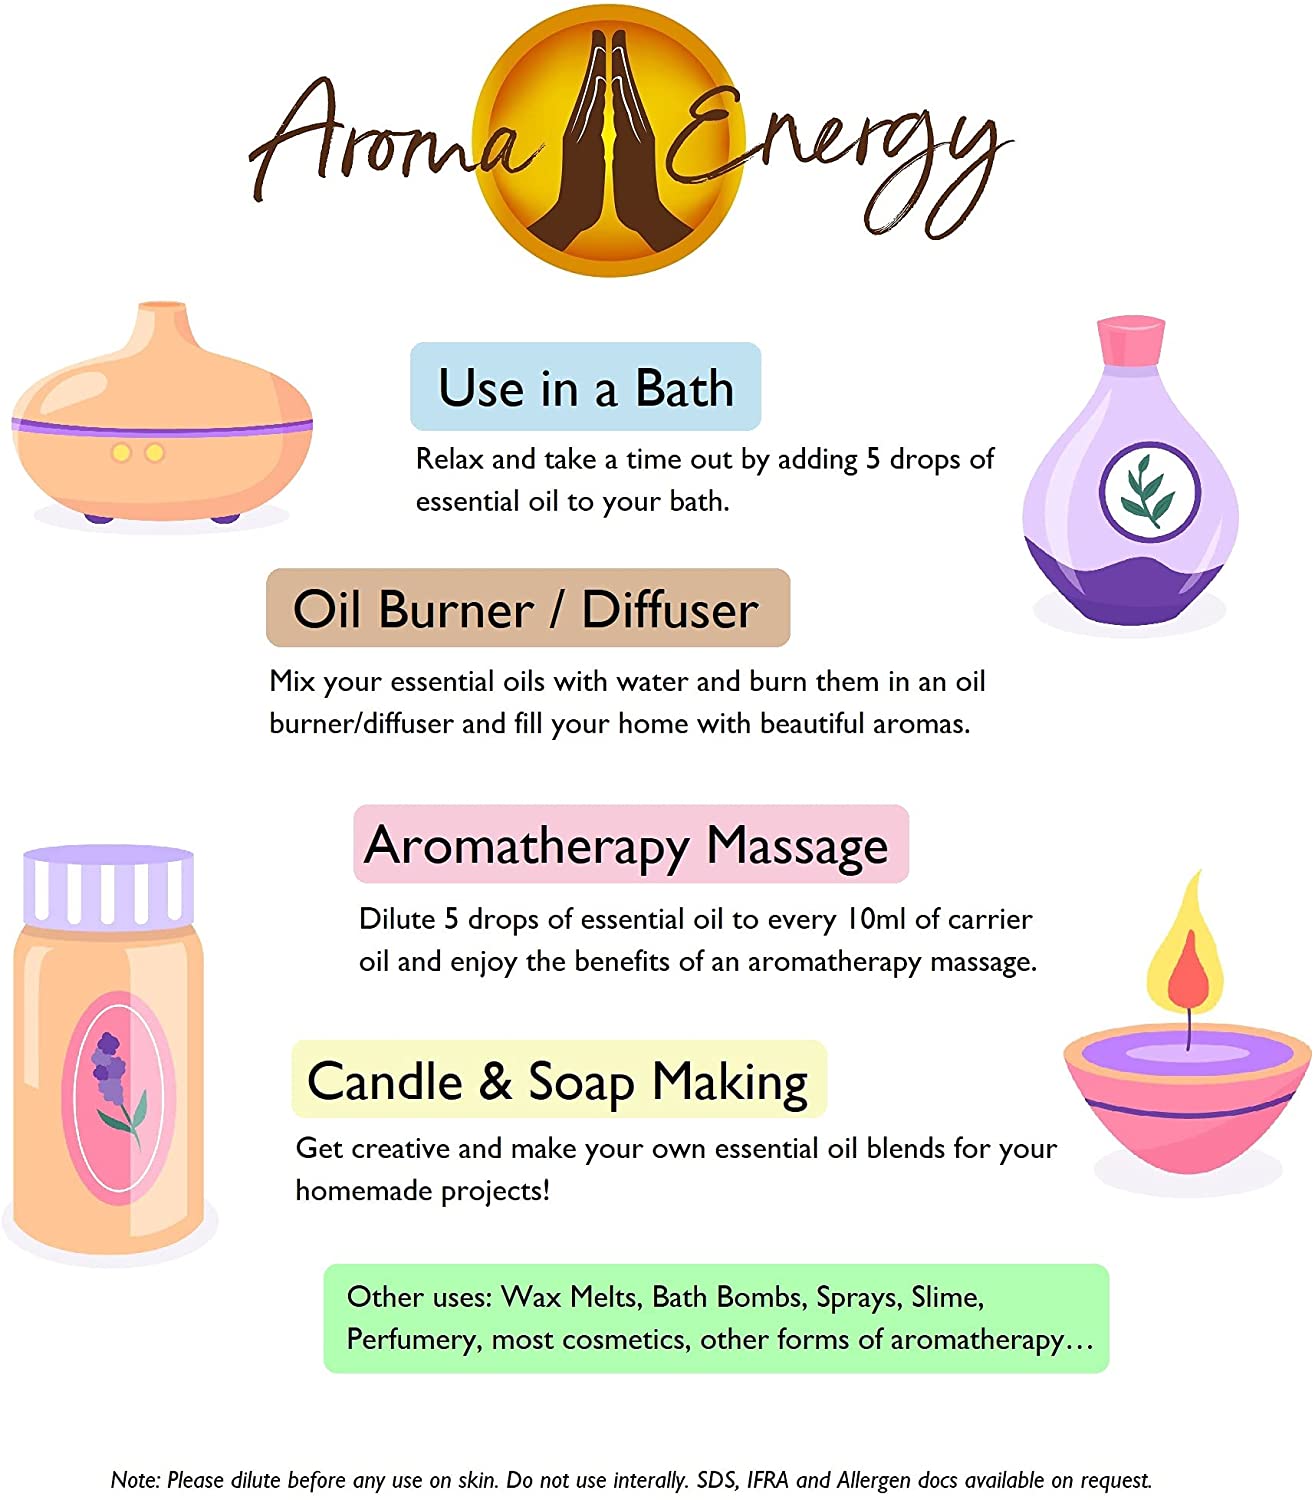 Orange & Lime Essential Oil Blend - Aroma Energy